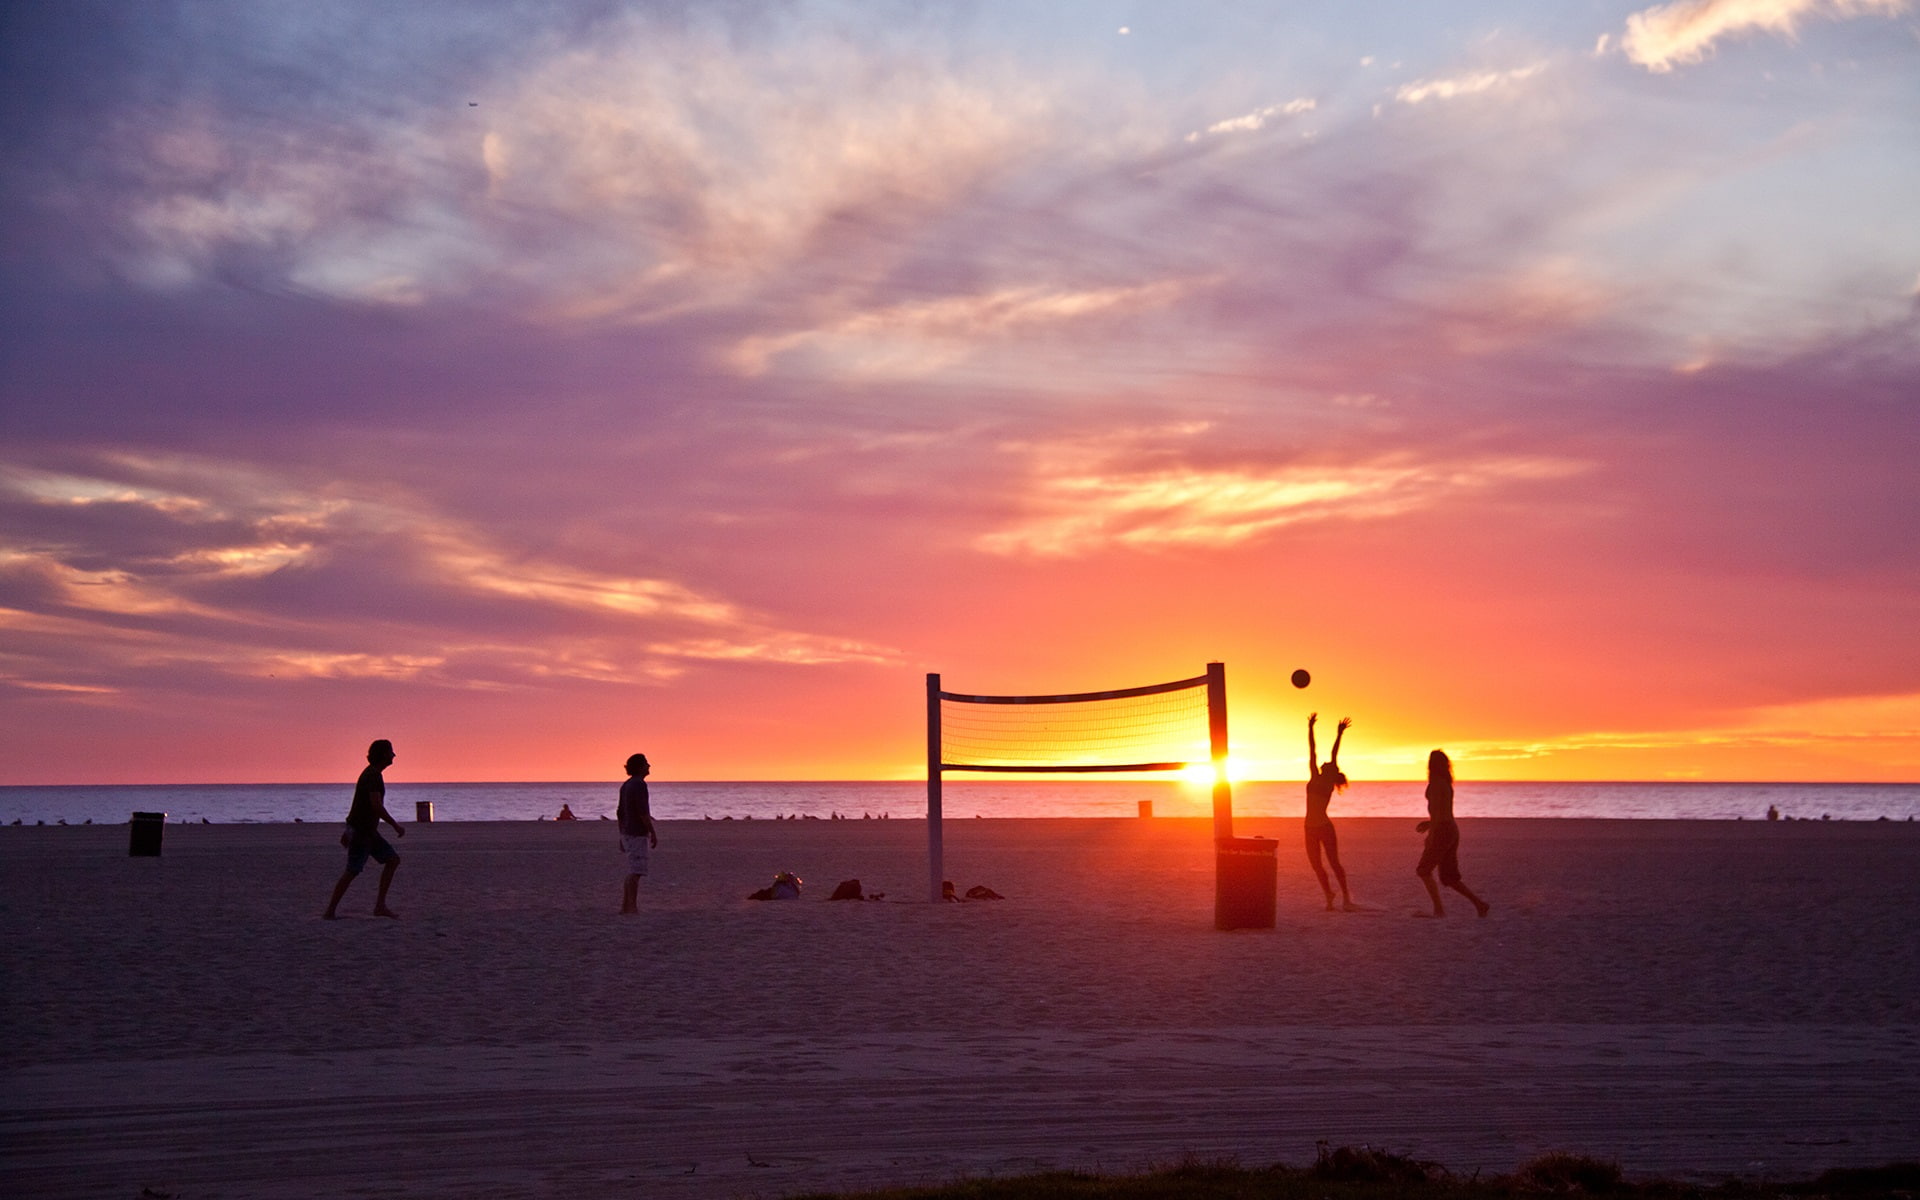 Venice beach, Los Angeles, California, USA, sunset, volleyball, people